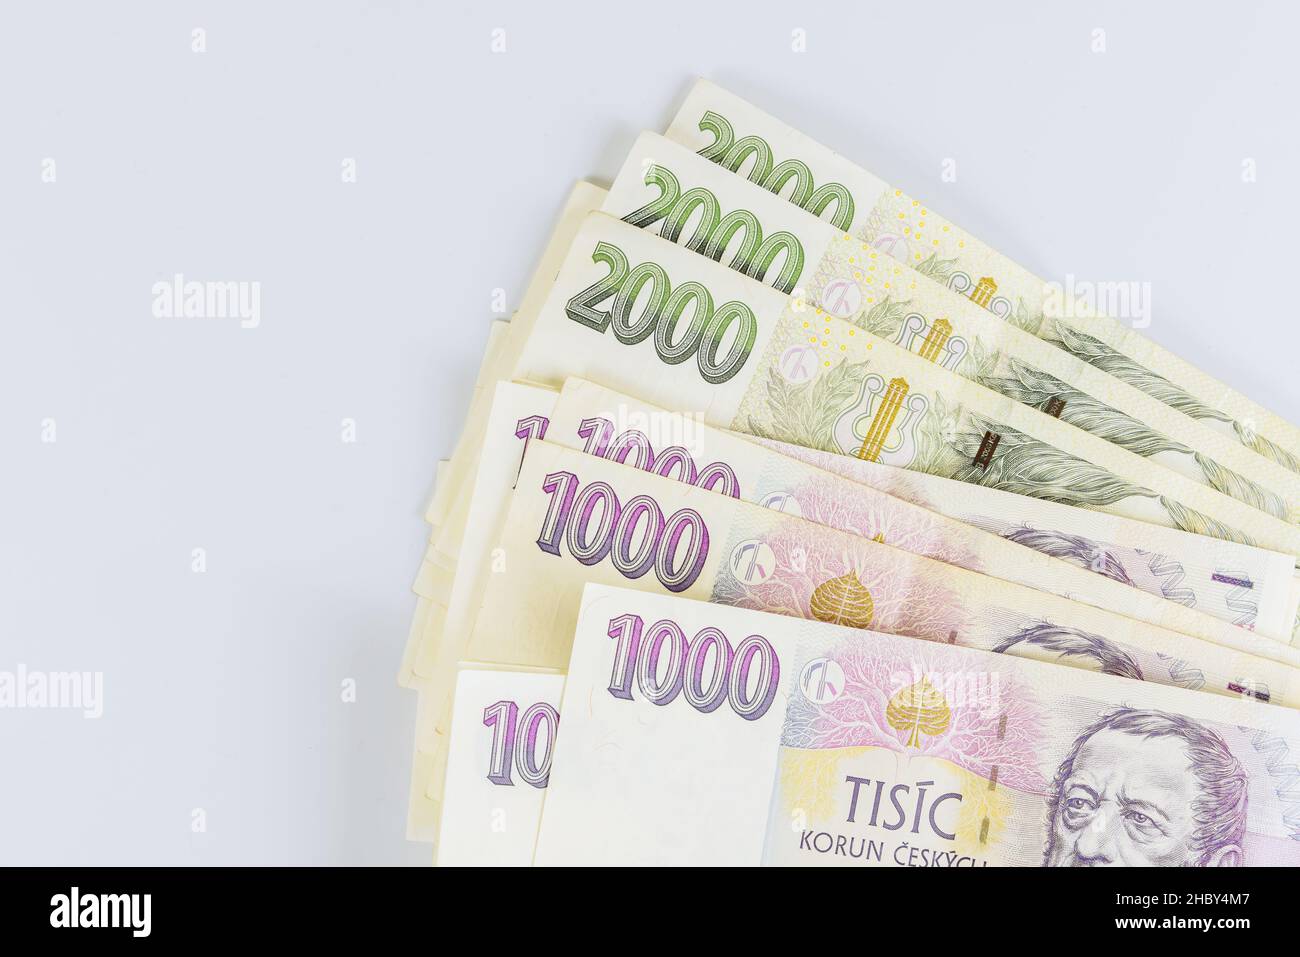 Czech koruna banknotes nominal value thousand currency Stock Photo